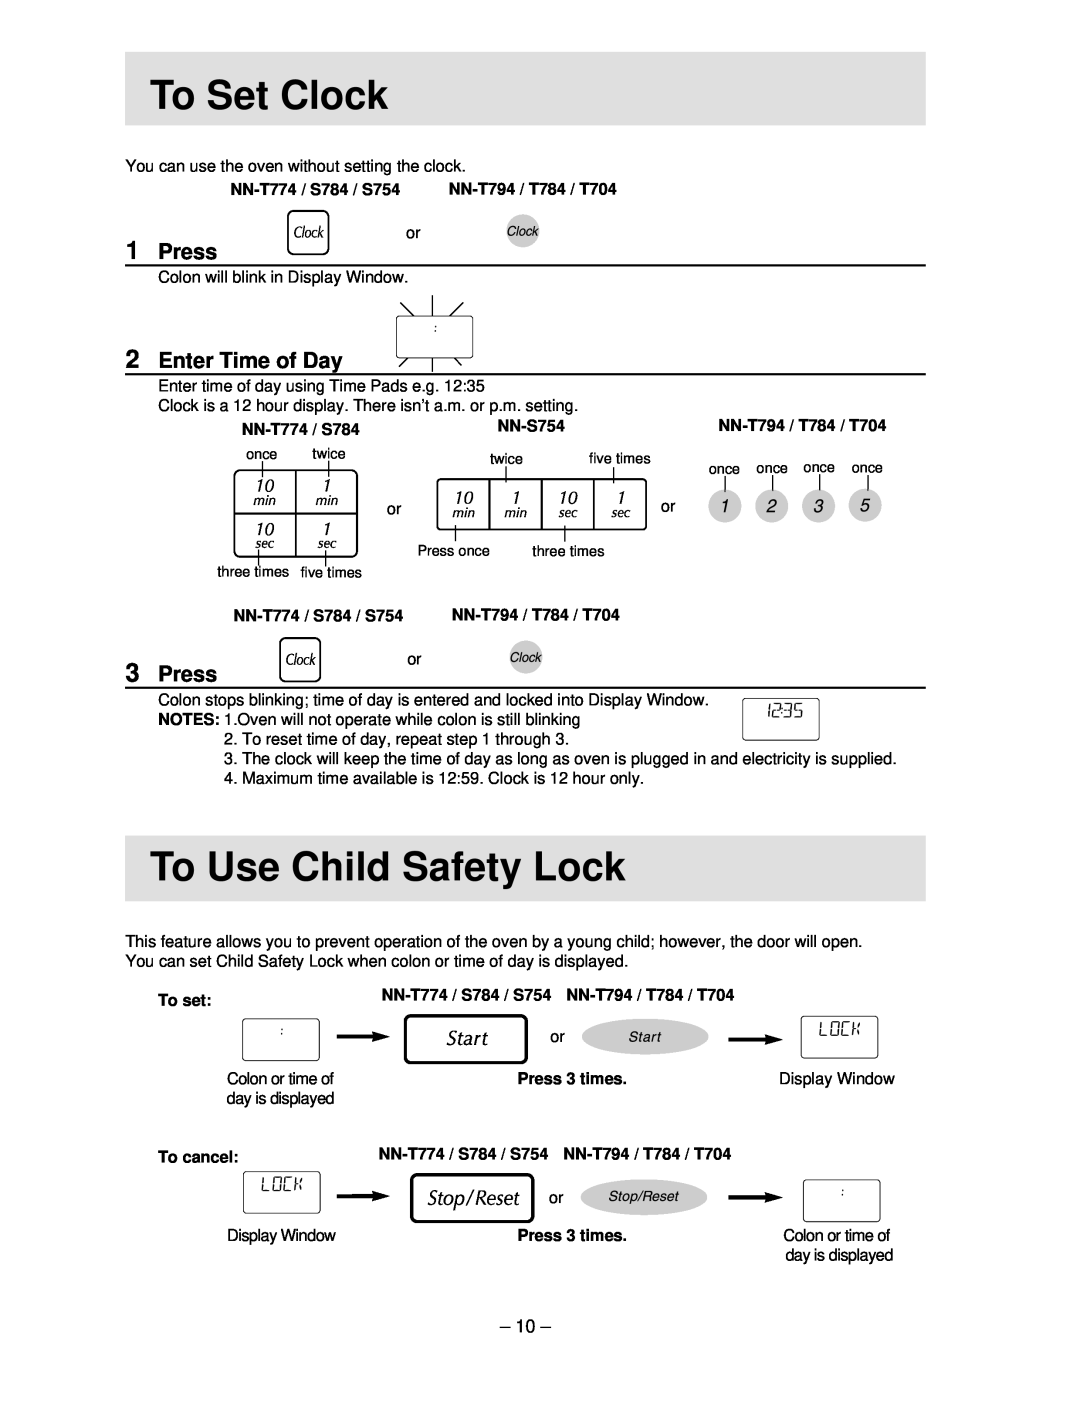 Panasonic NN-S754 manual hTo Seth Clock, To Use Child Safety Lock, 1Press, 2Enter Time of Day, 3Press 